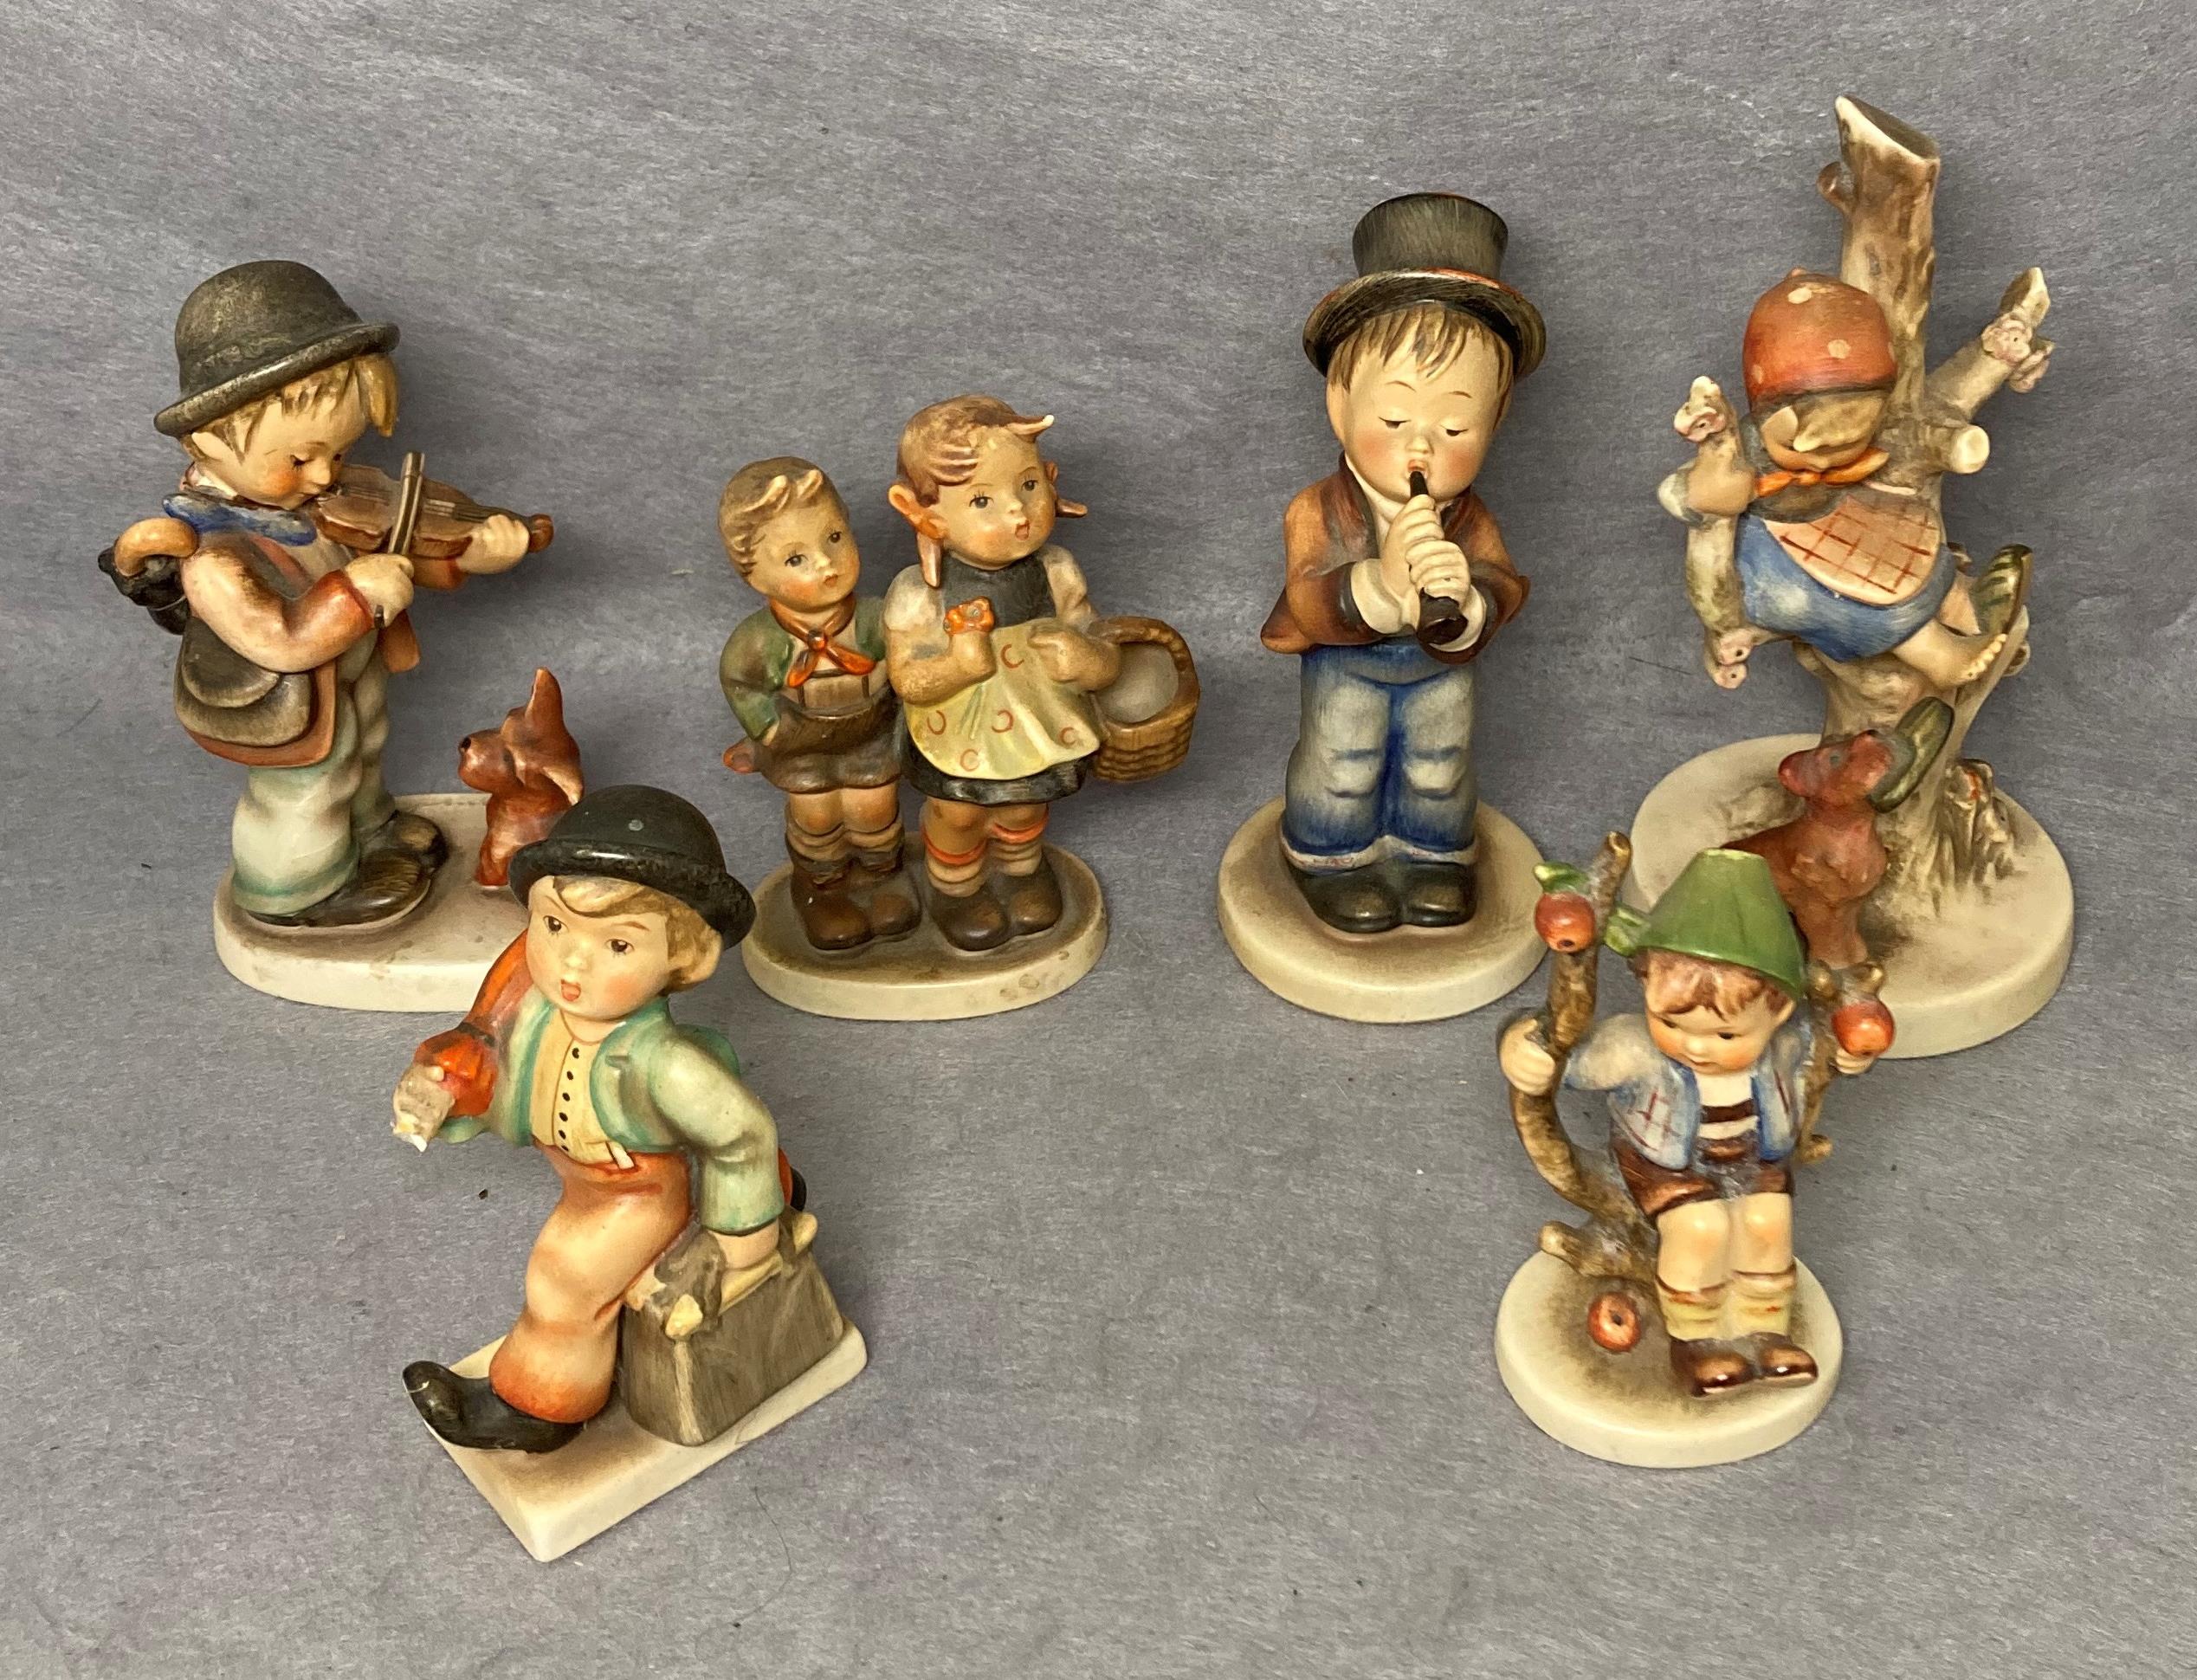 Six 20th Century Hummel ceramic figurines (one has been repaired) (saleroom location: S3 QC17 GC)